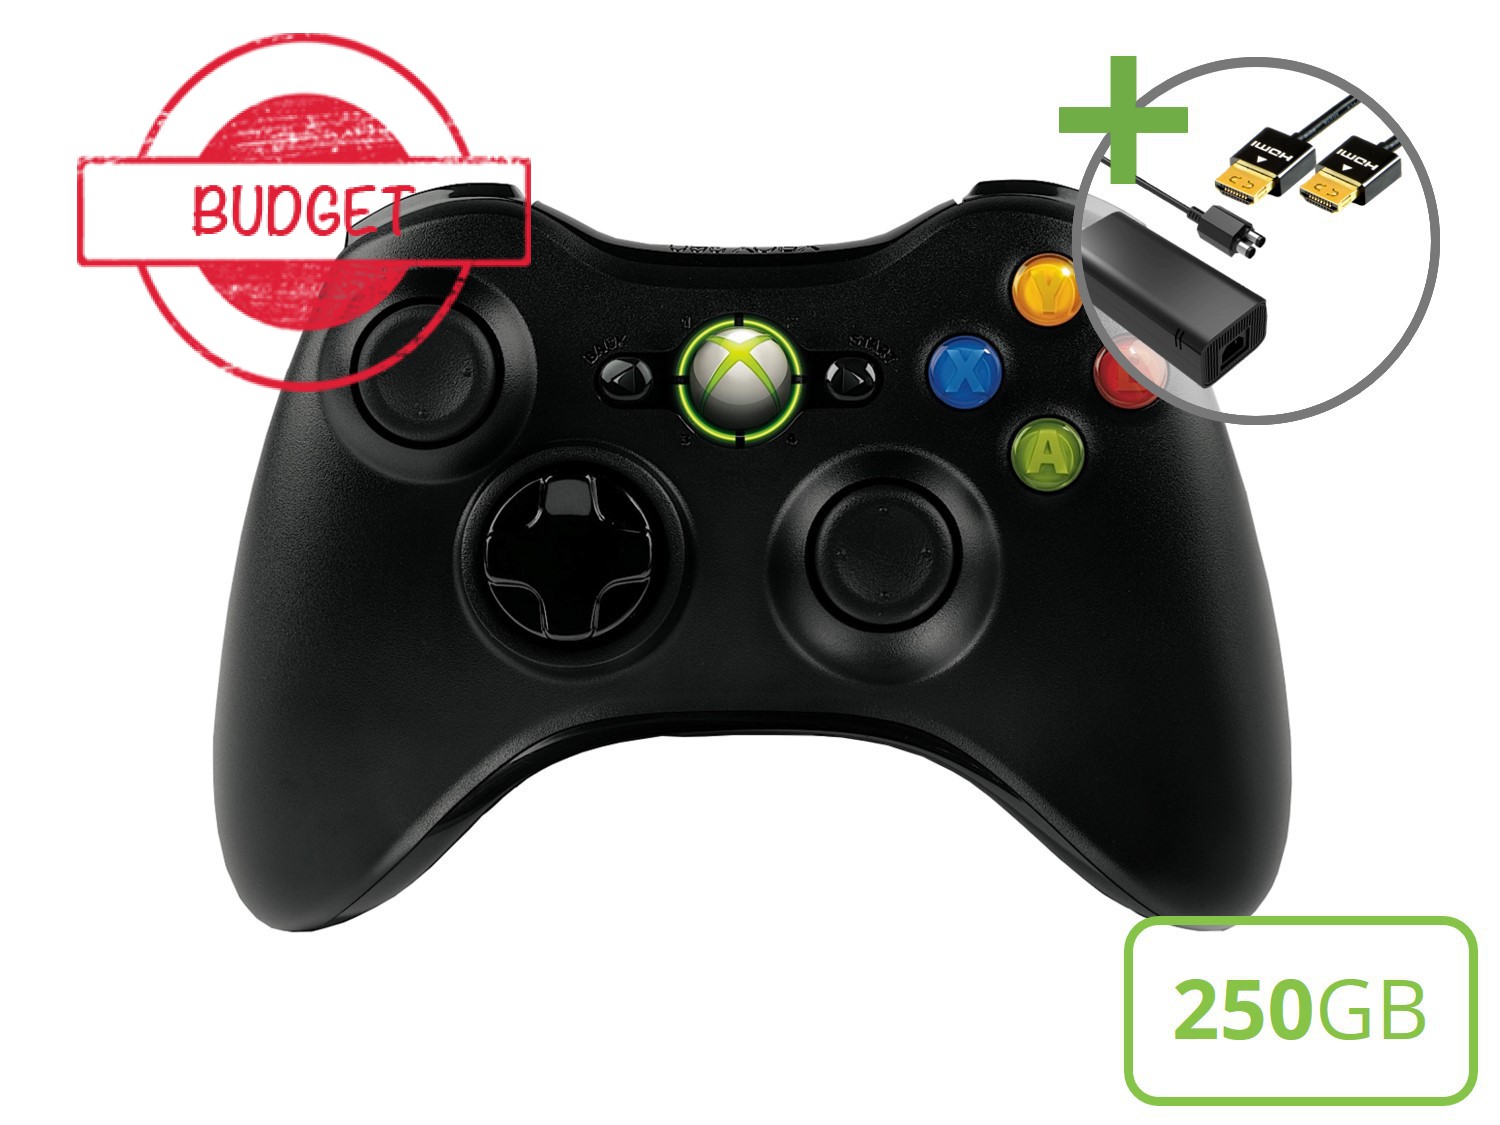 Microsoft Xbox 360 Slim Starter Pack - Forza 3 and Crisis 2 Edition - Budget - Xbox 360 Hardware - 4